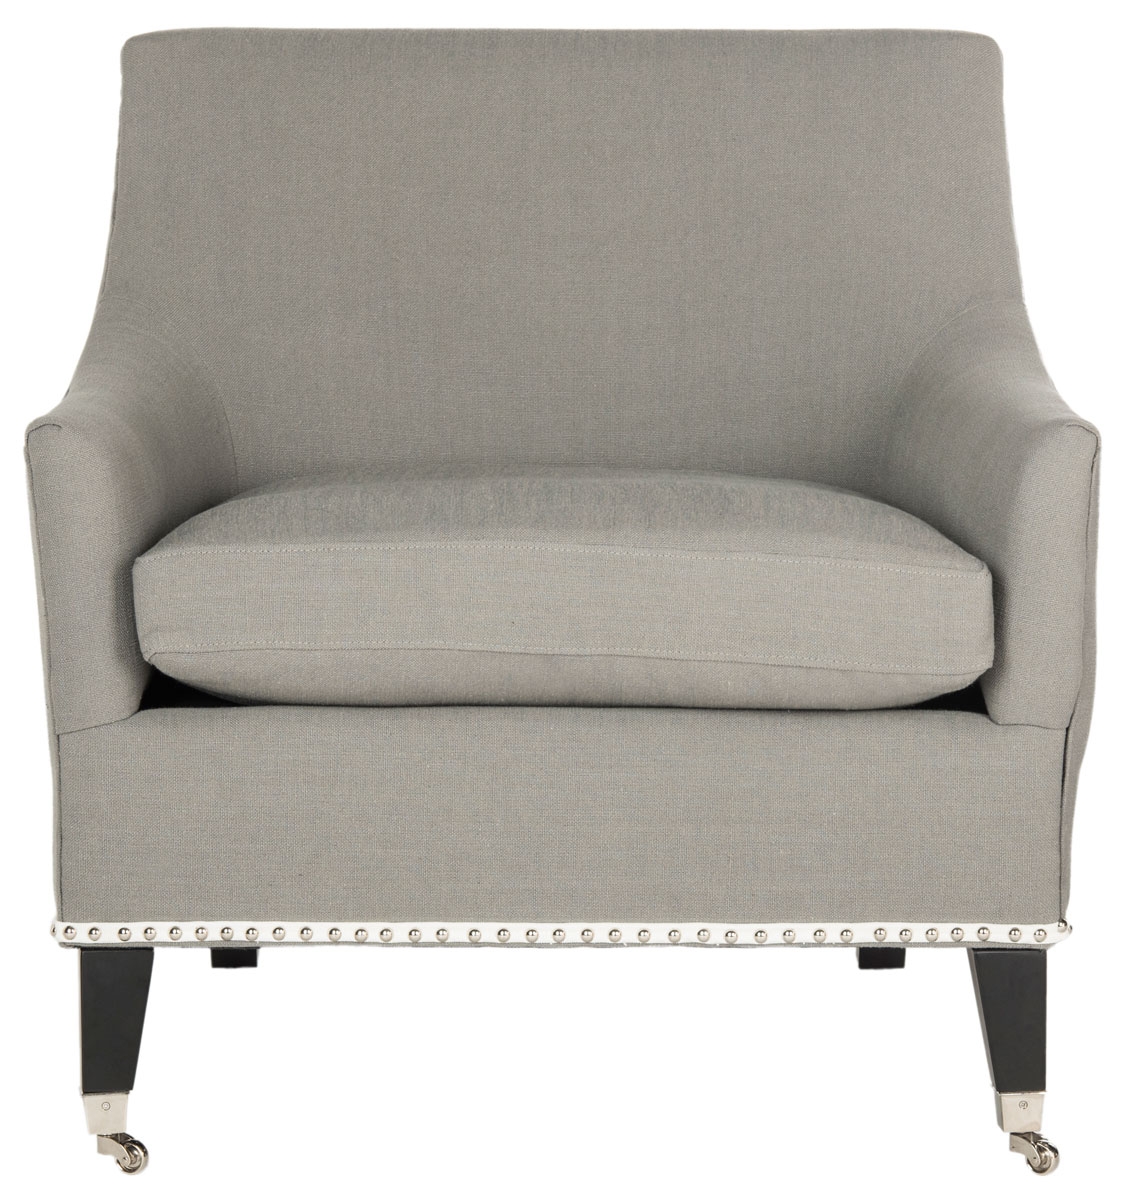 Barlow Arm Chair W/ Silver Nail Heads - Granite/Black - Arlo Home - Image 1